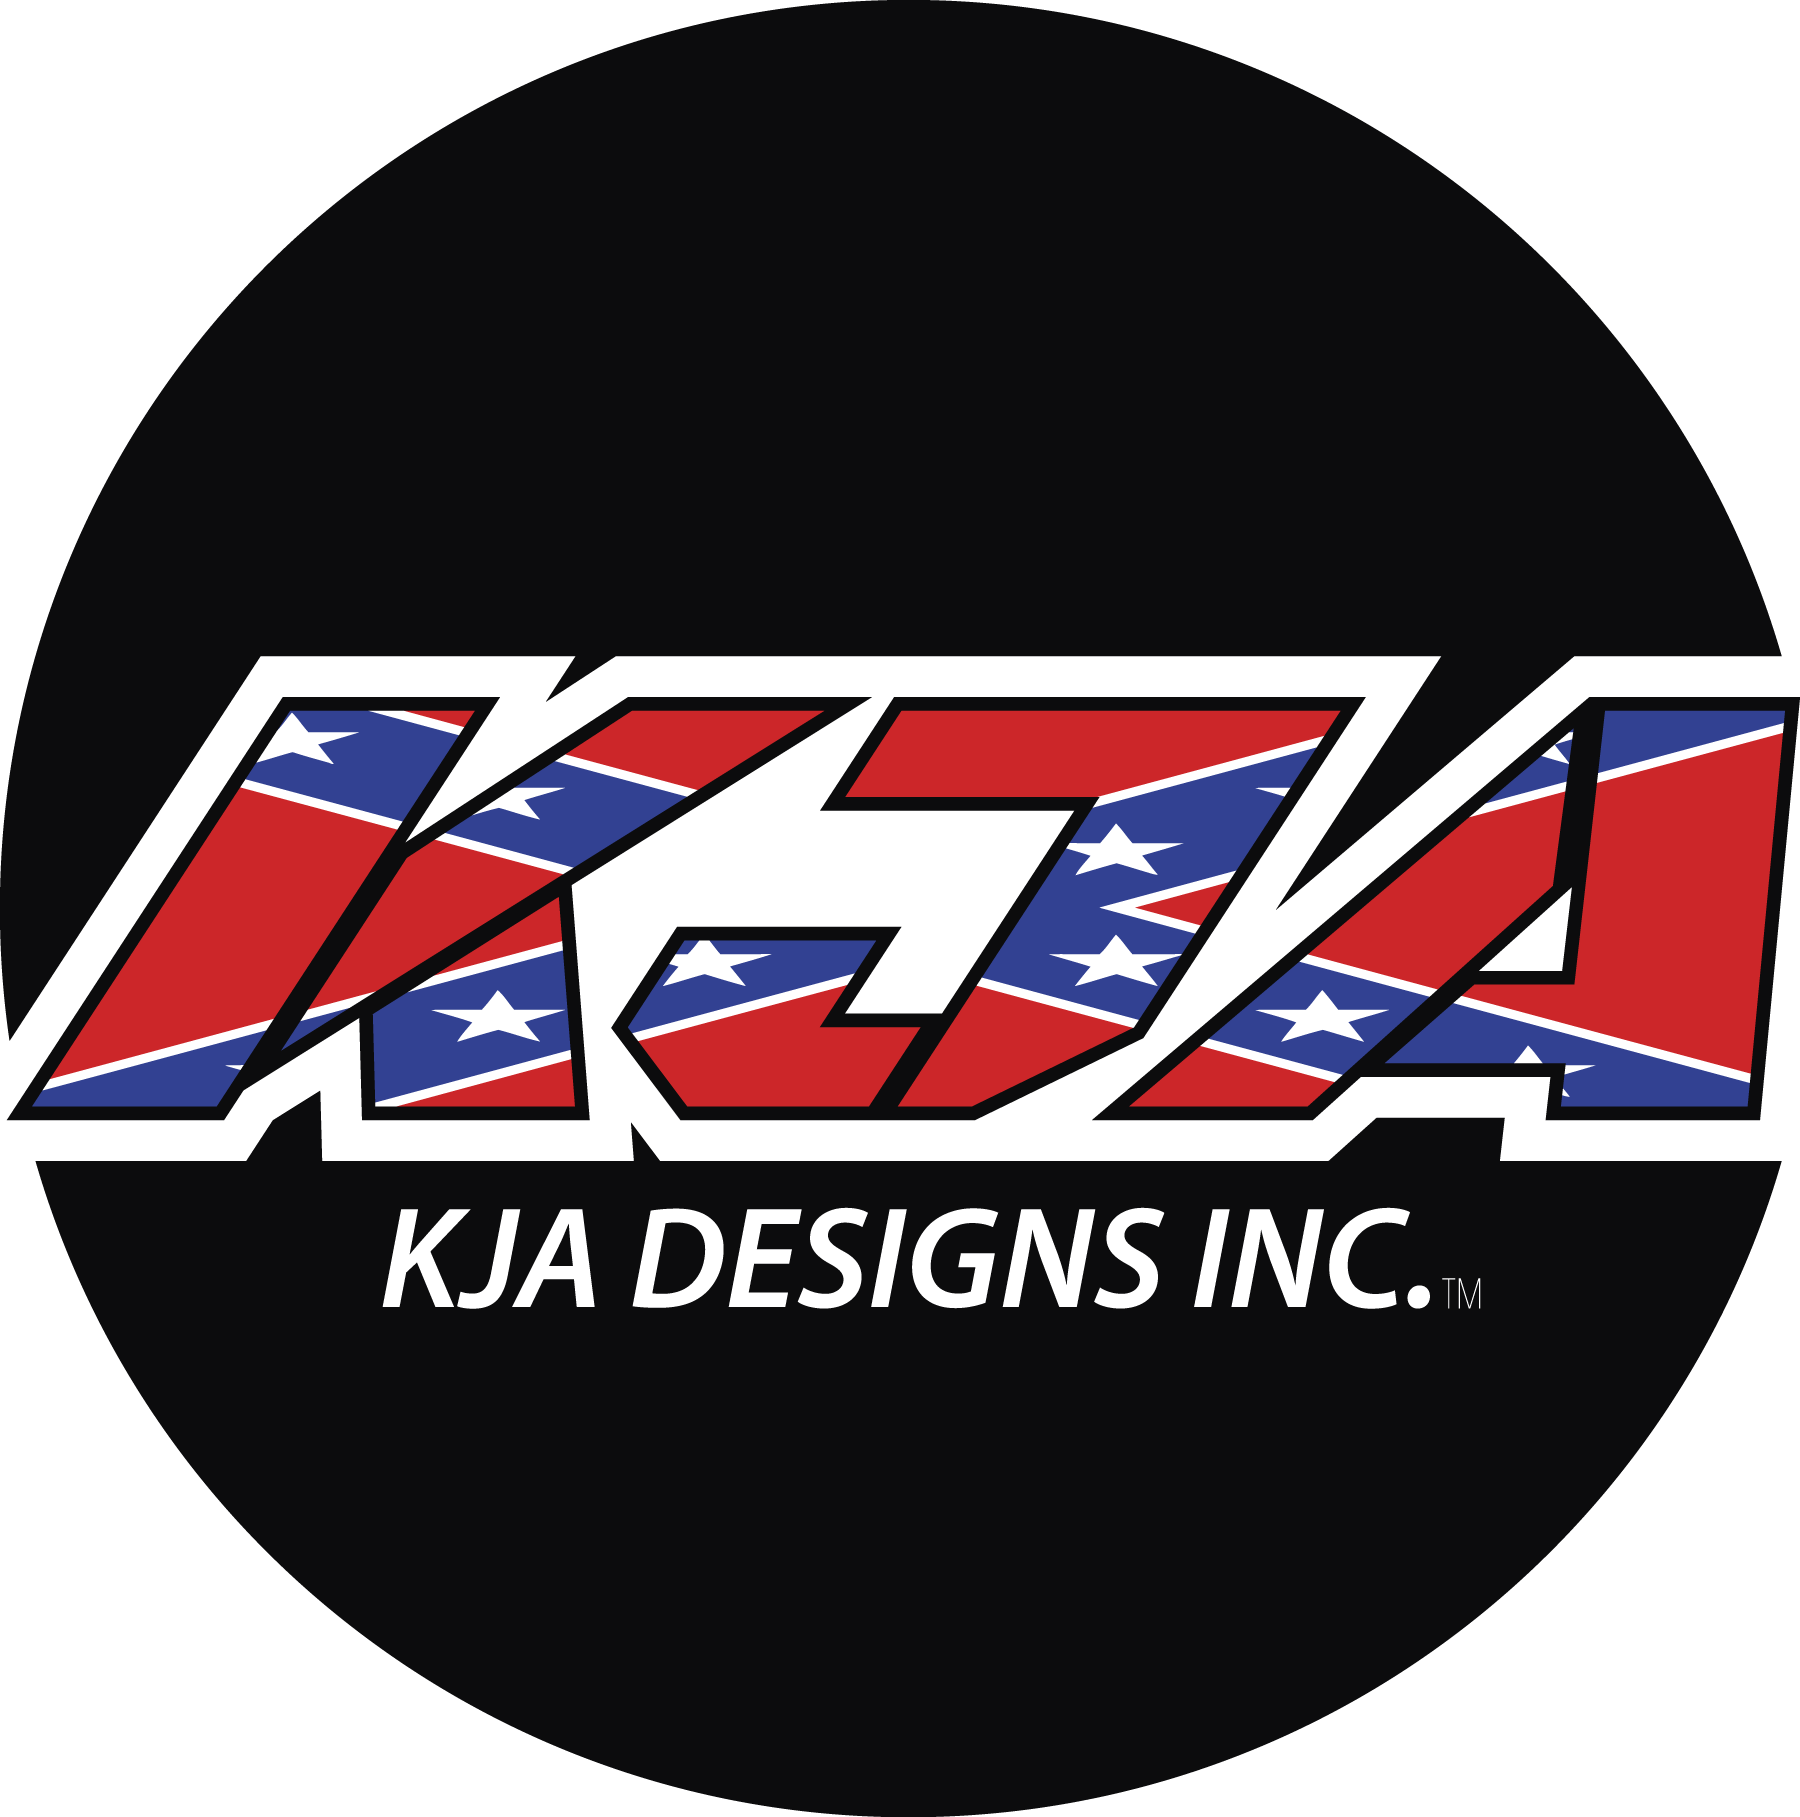 KJA Designs Inc.™ 3A on site